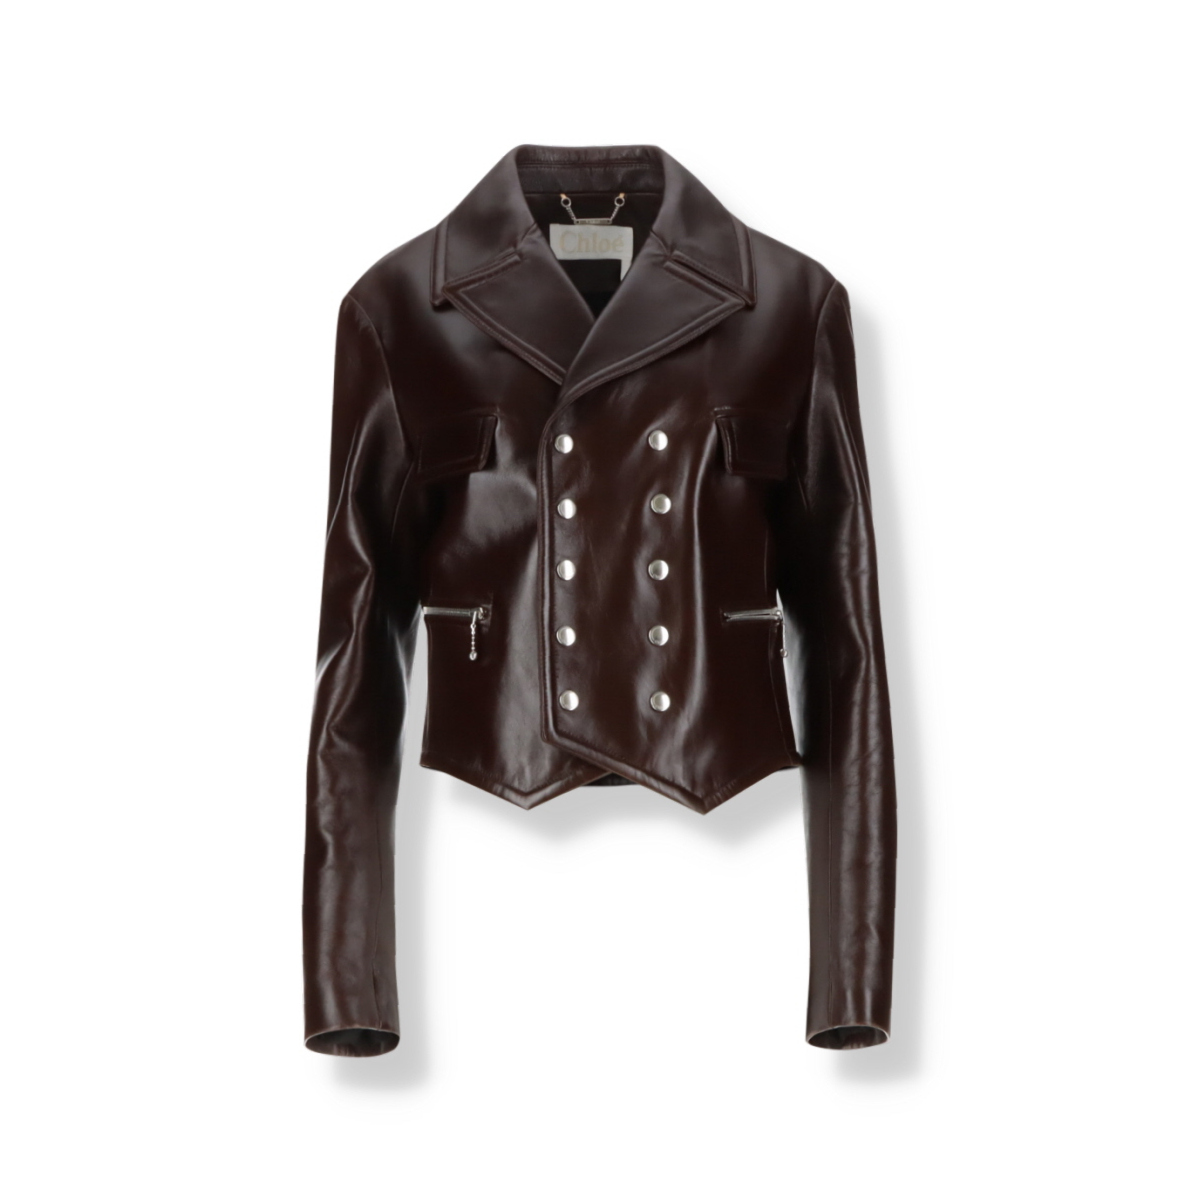 Chloé Leather Jacket - Outlet